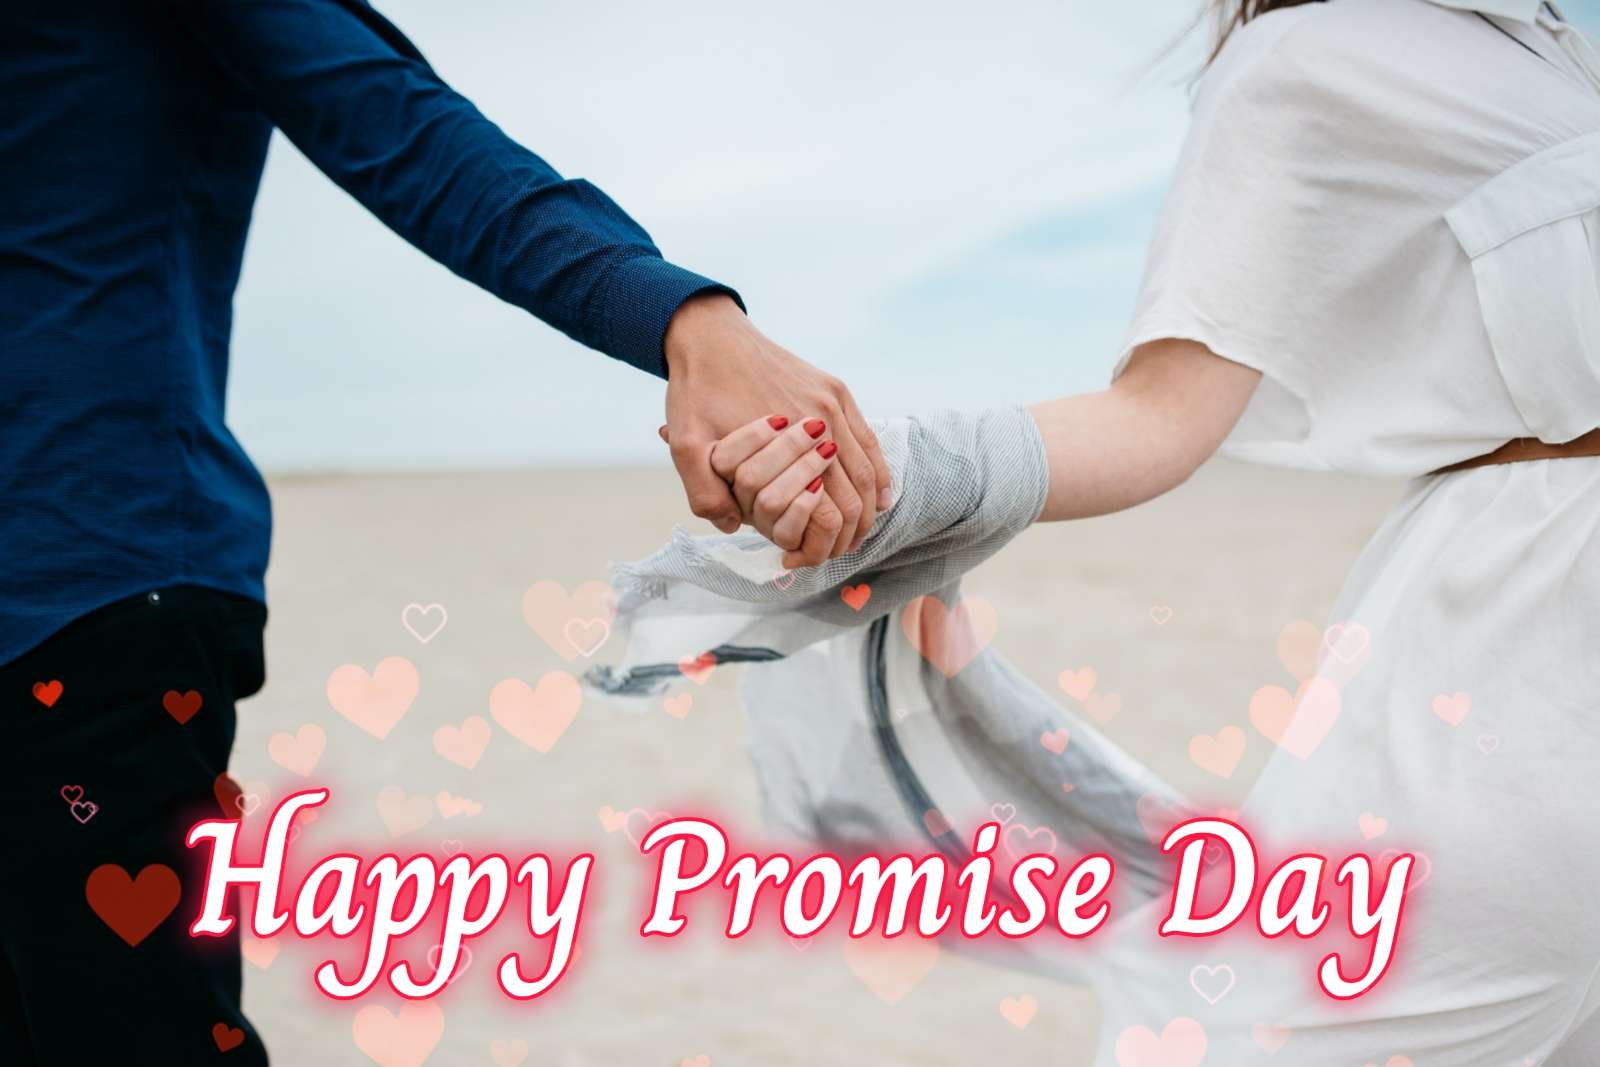 Happy Promise Day Ki Image Download